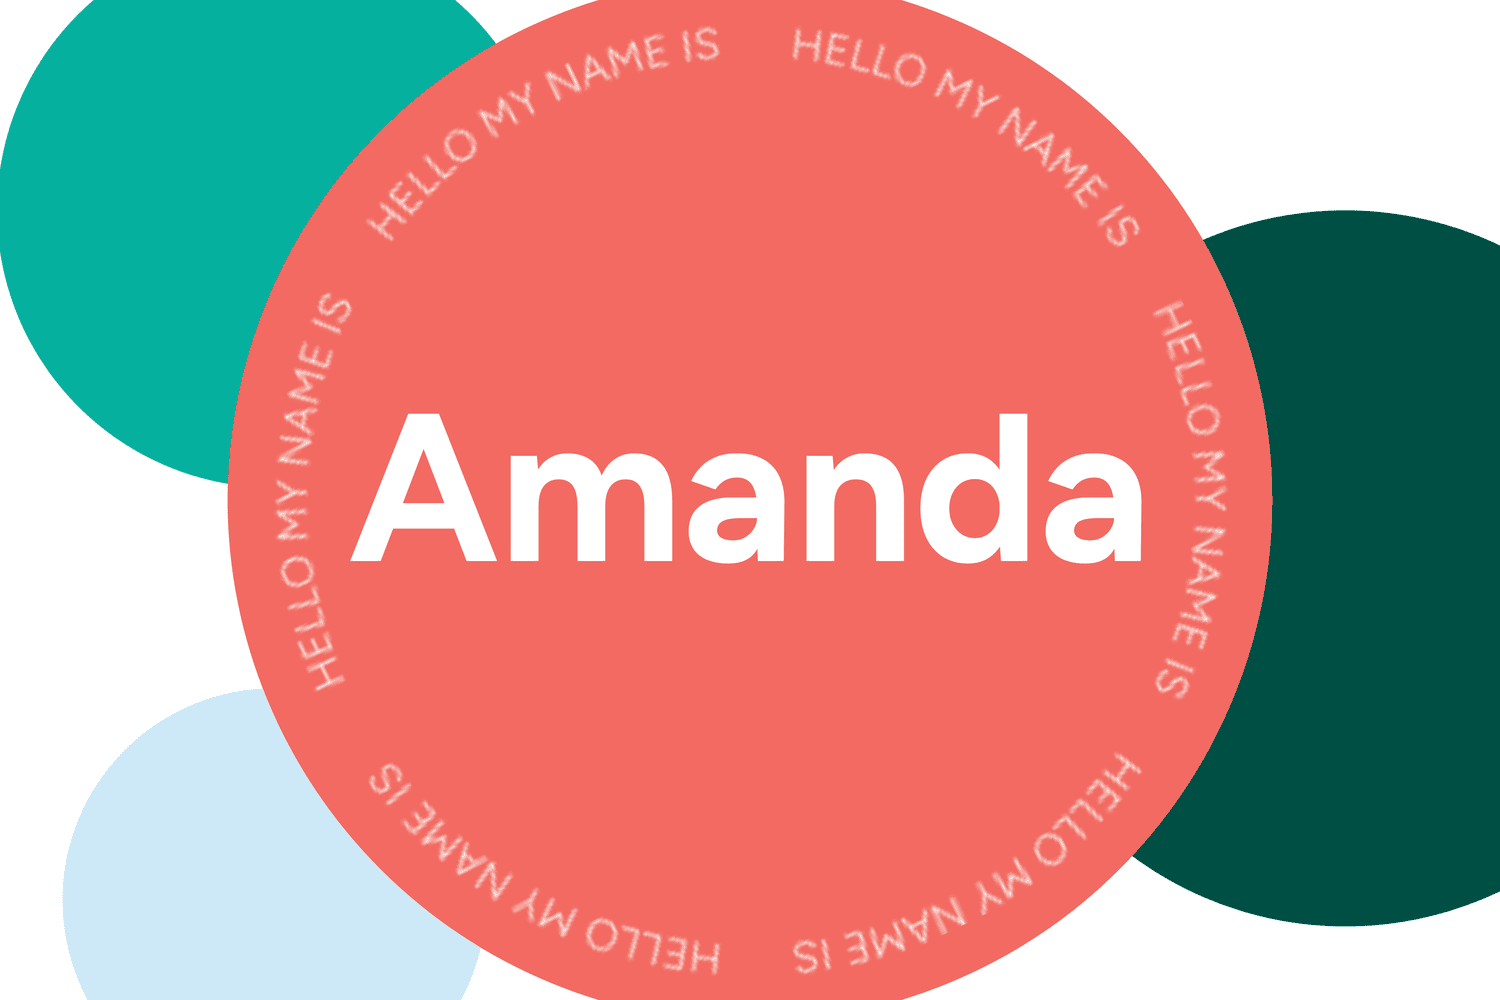 Amanda: significado del nombre, origen, popularidad